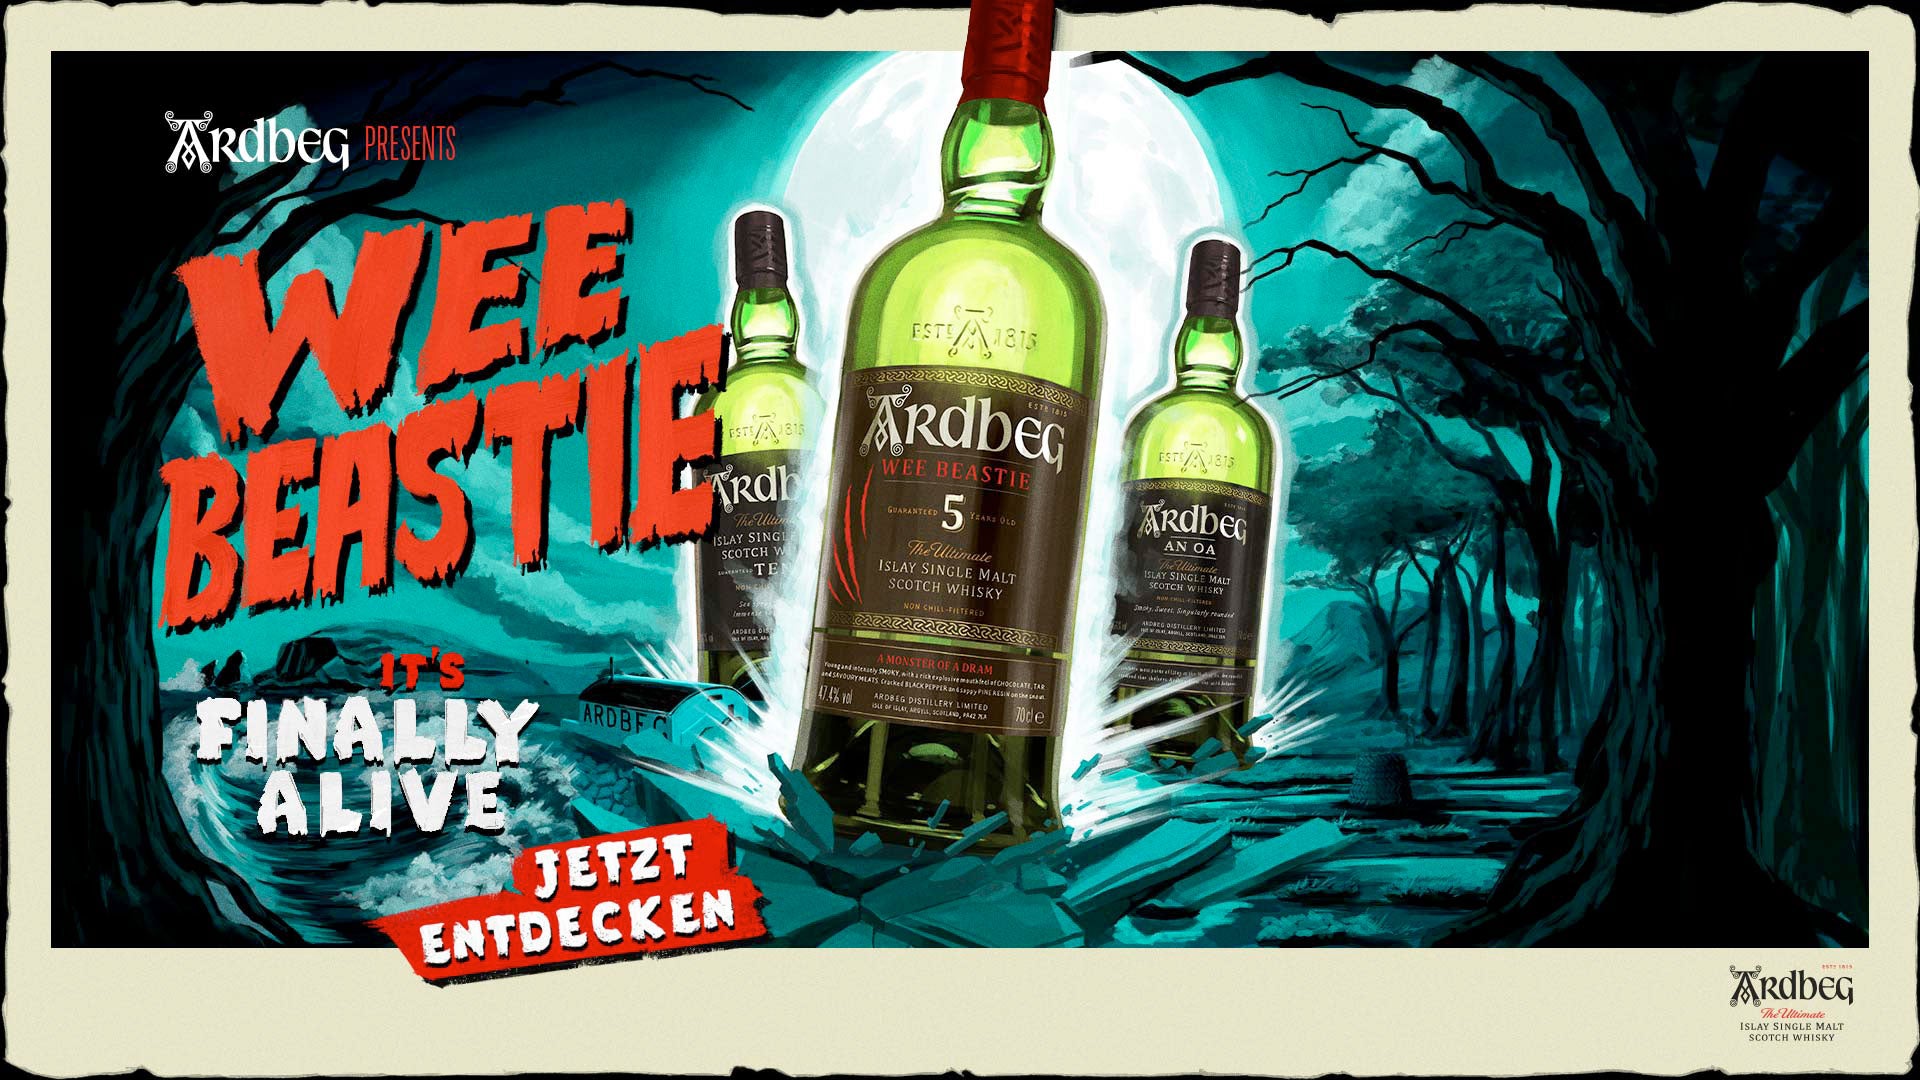 Whisky Ardbeg Wee Beastie – 5 Years Old Islay Single Malt Scotch